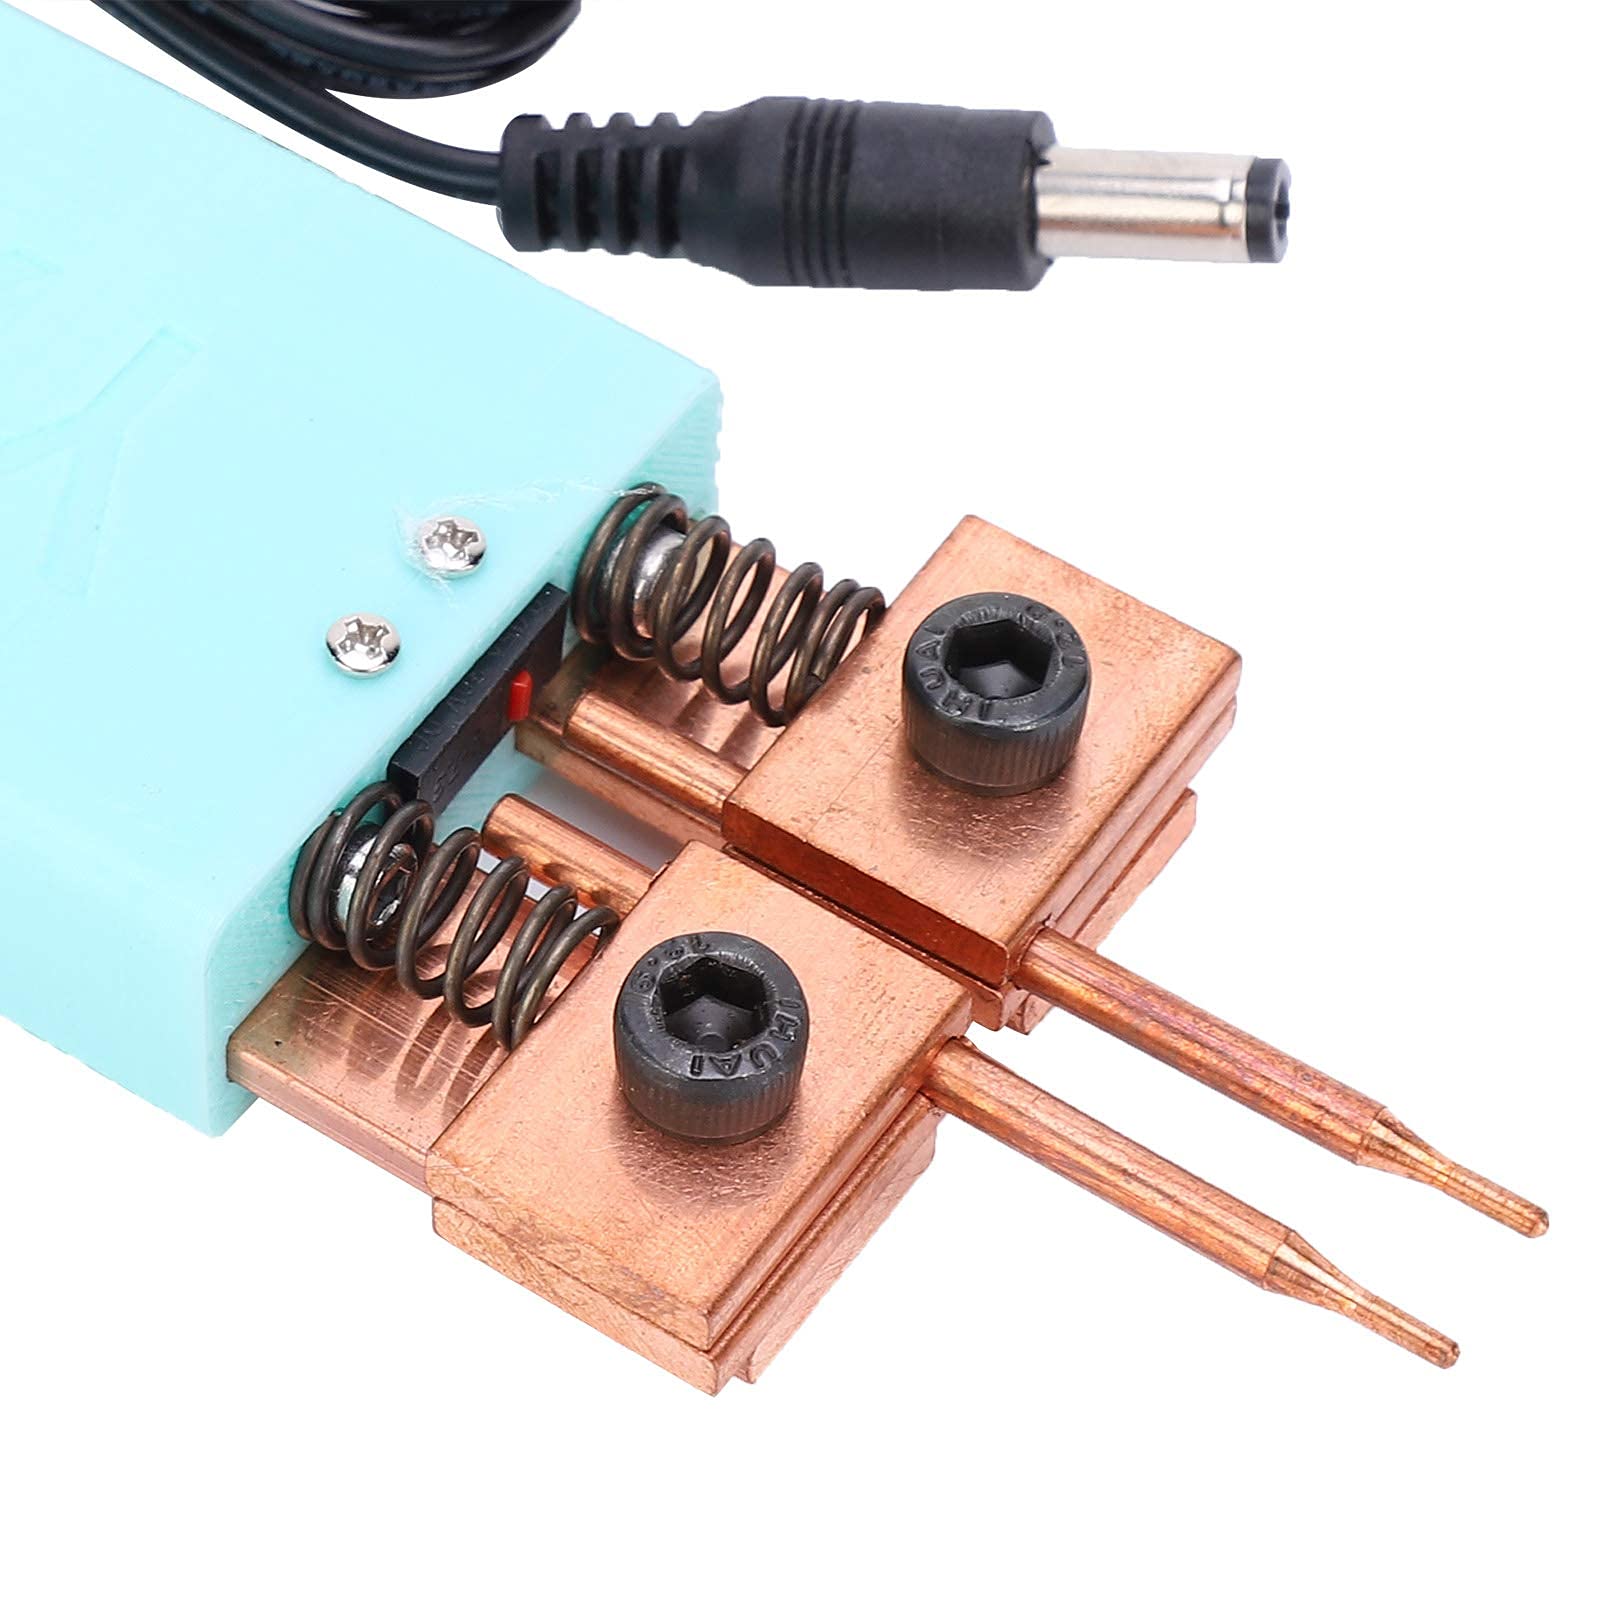 Surebuy 18650 Integrated Spot Welder Pen ABS for Industrial Long‑term Work Assembling Battery Packs